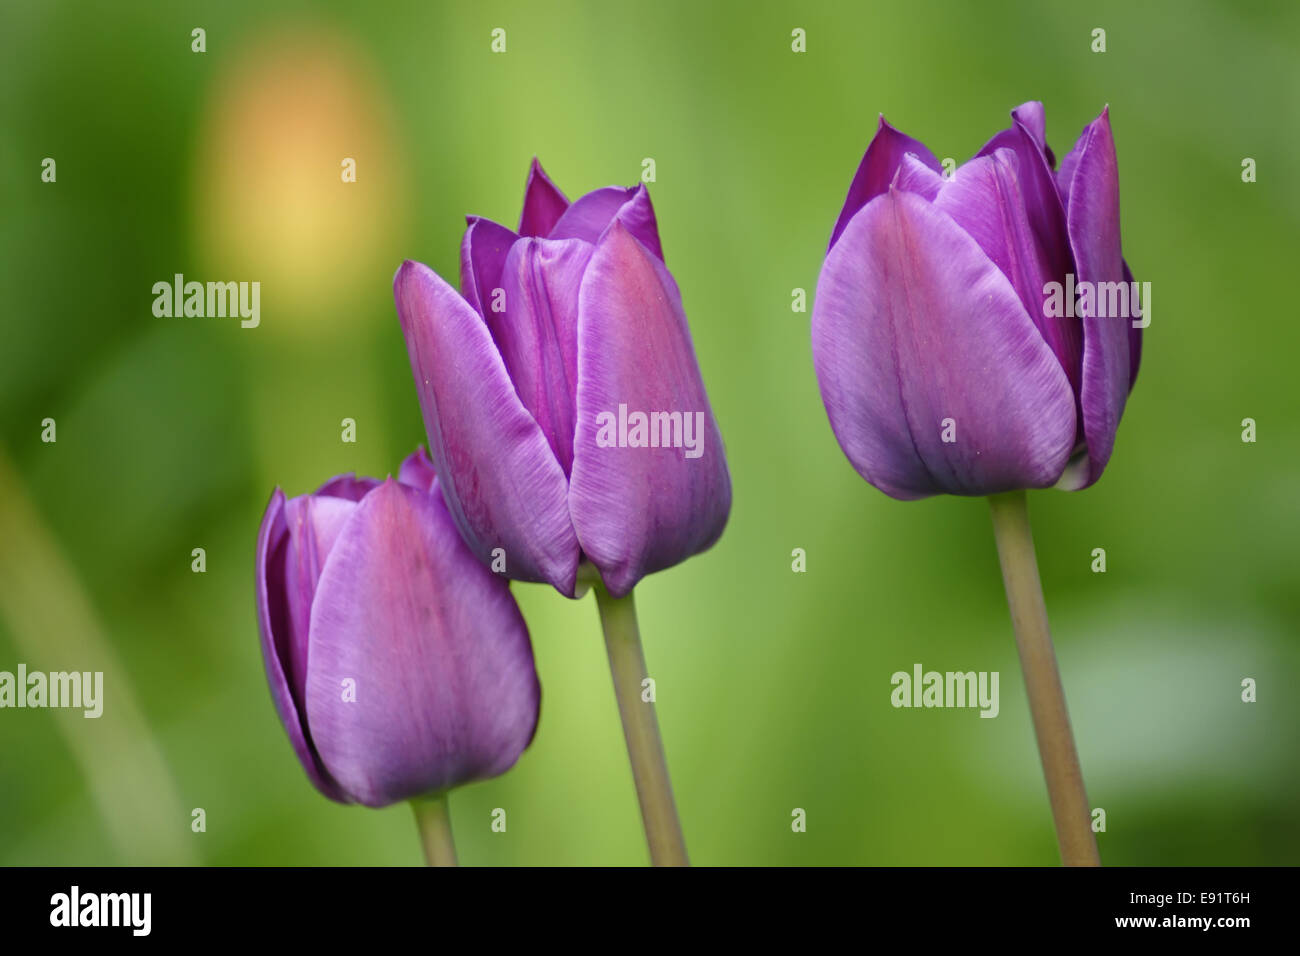 3 violet tulips Stock Photo